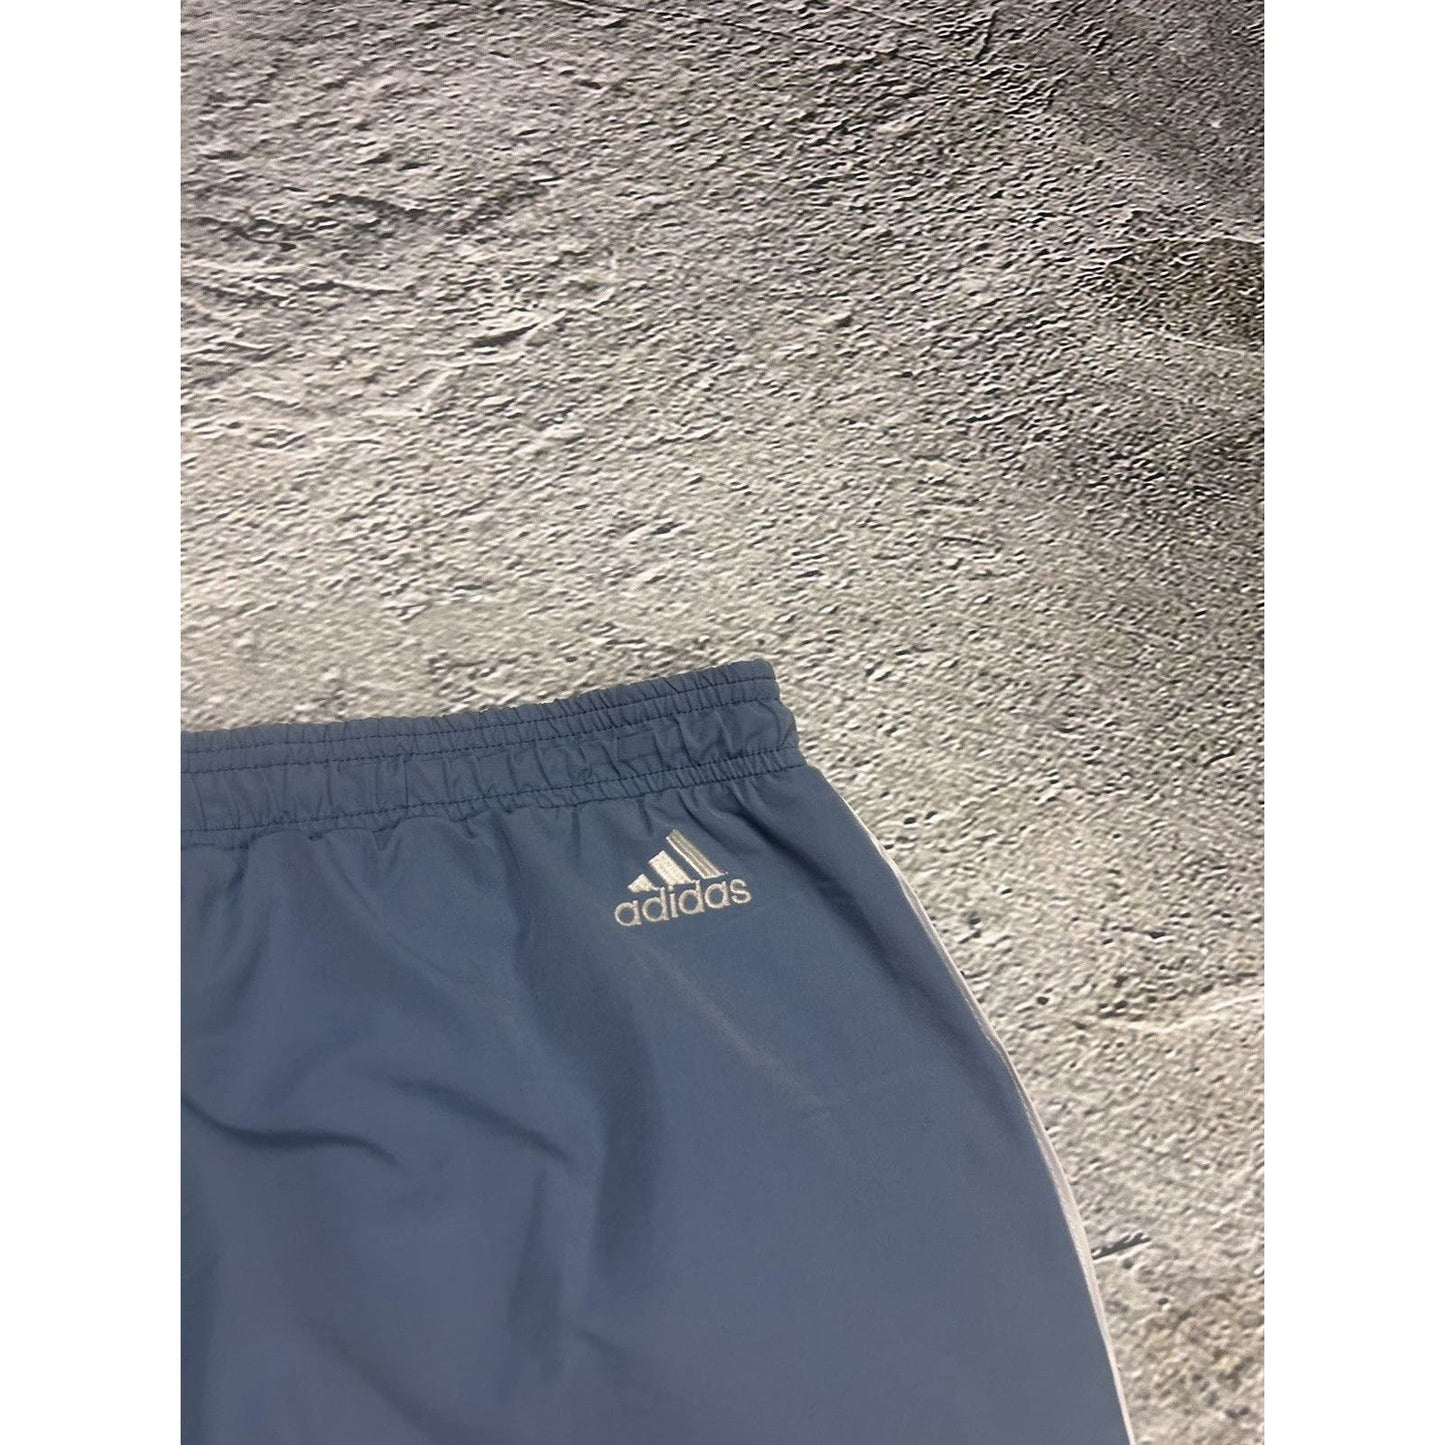 Adidas vintage blue nylon track pants small logo 2000s